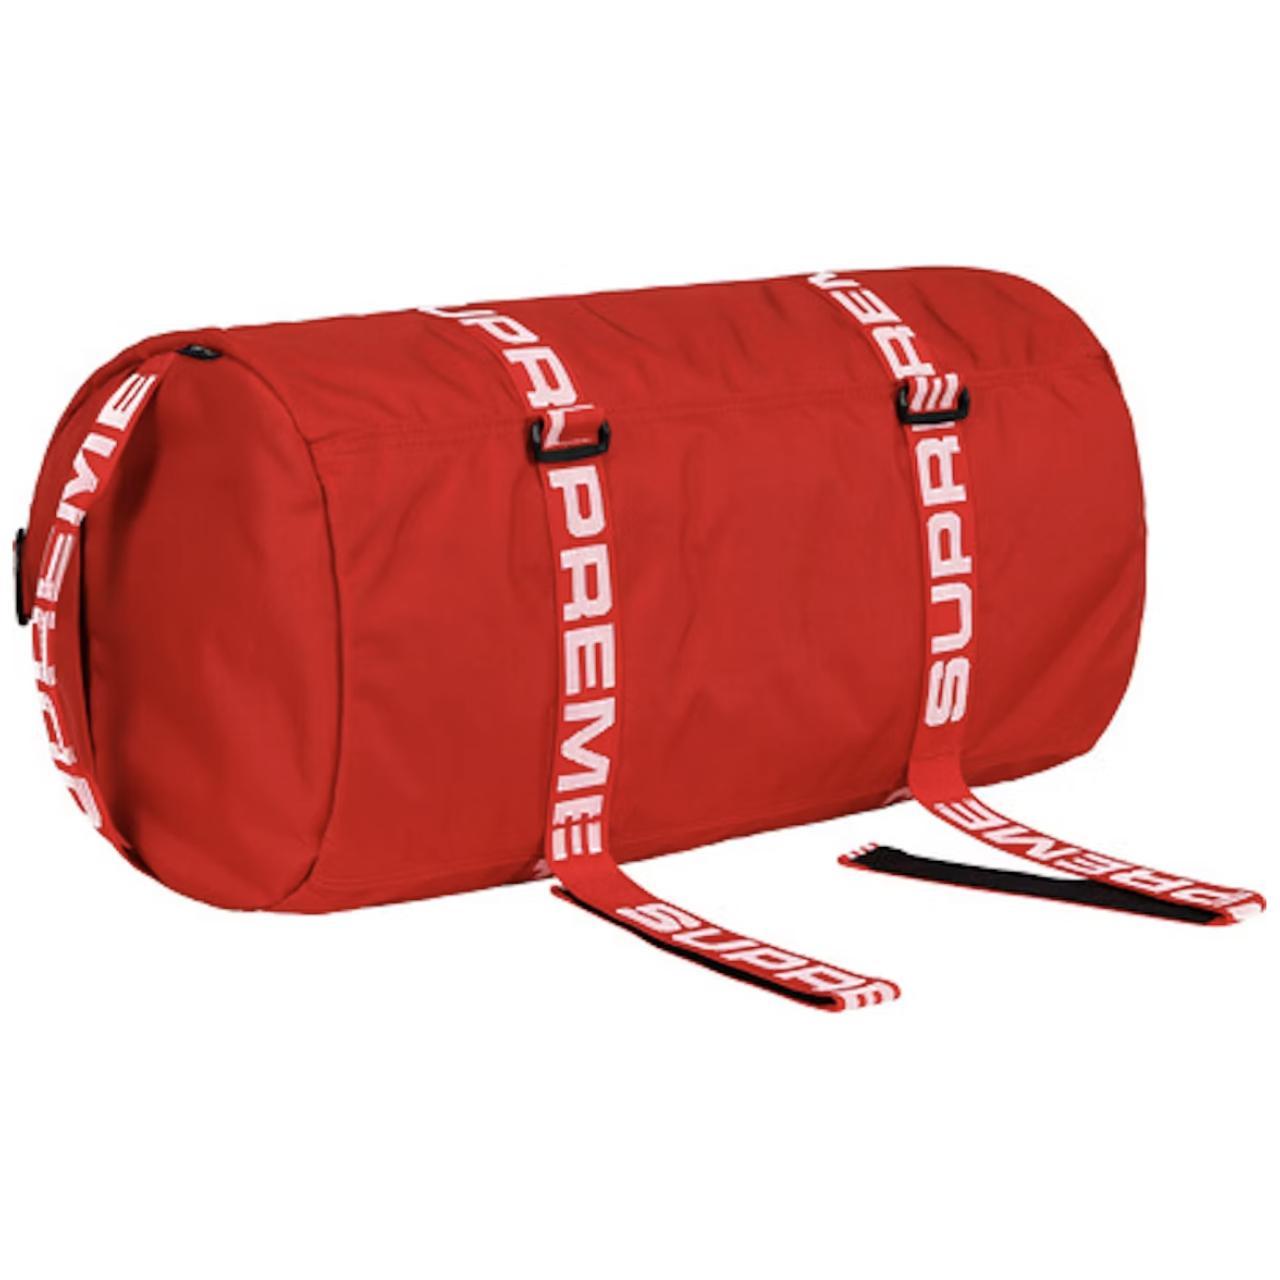 Supreme Duffle Bag SS18 Red